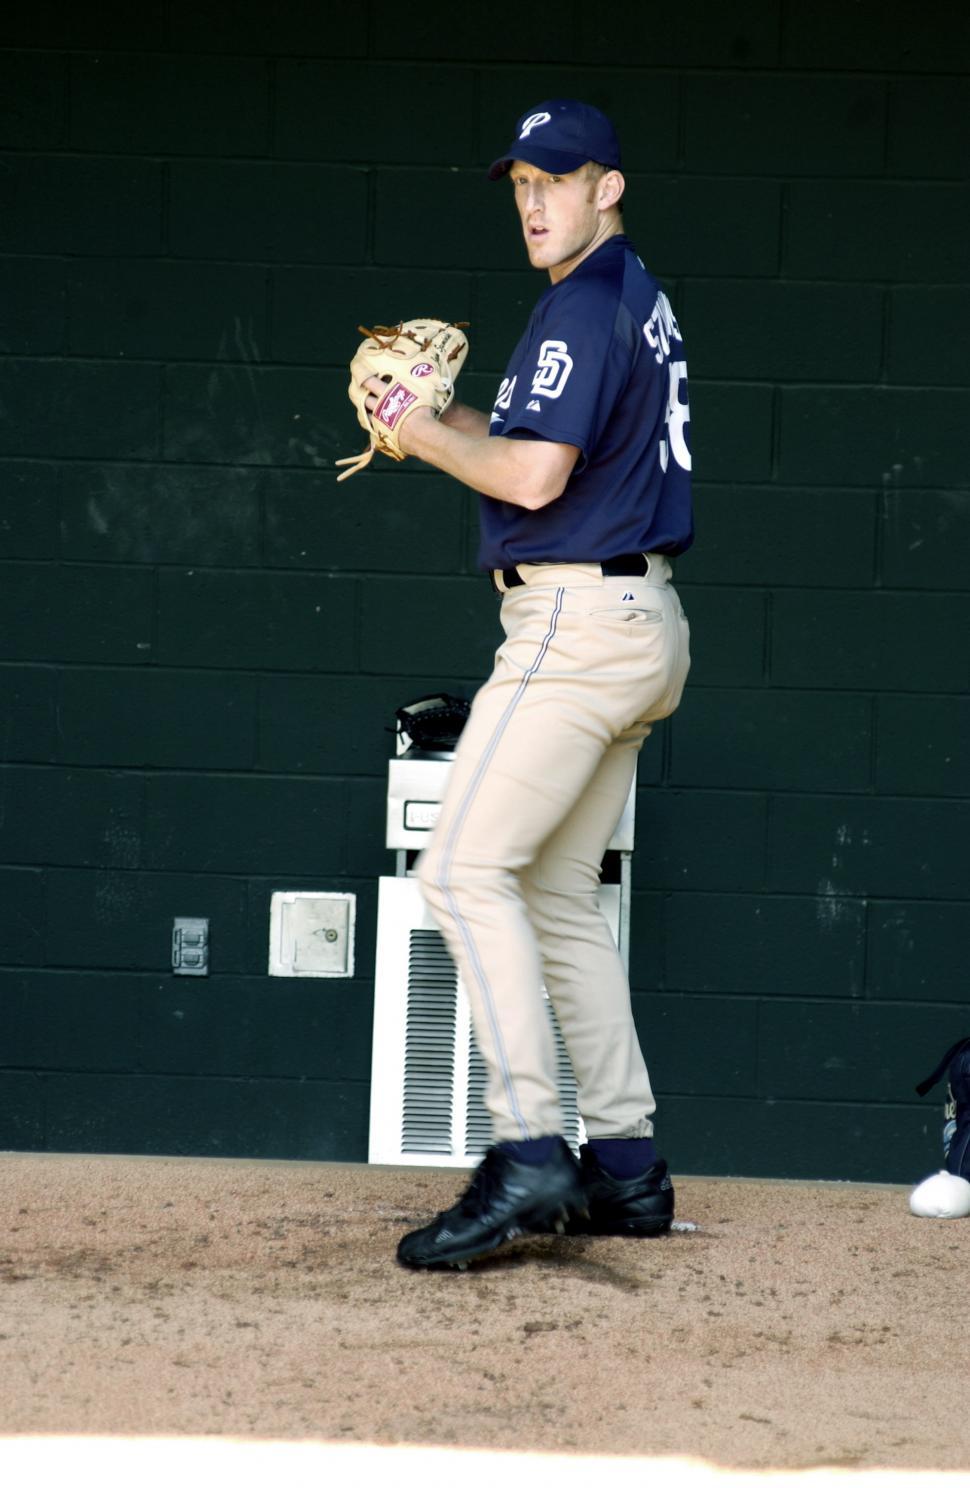 Free Image of Man in Baseball Uniform Holding Catchers Mitt 